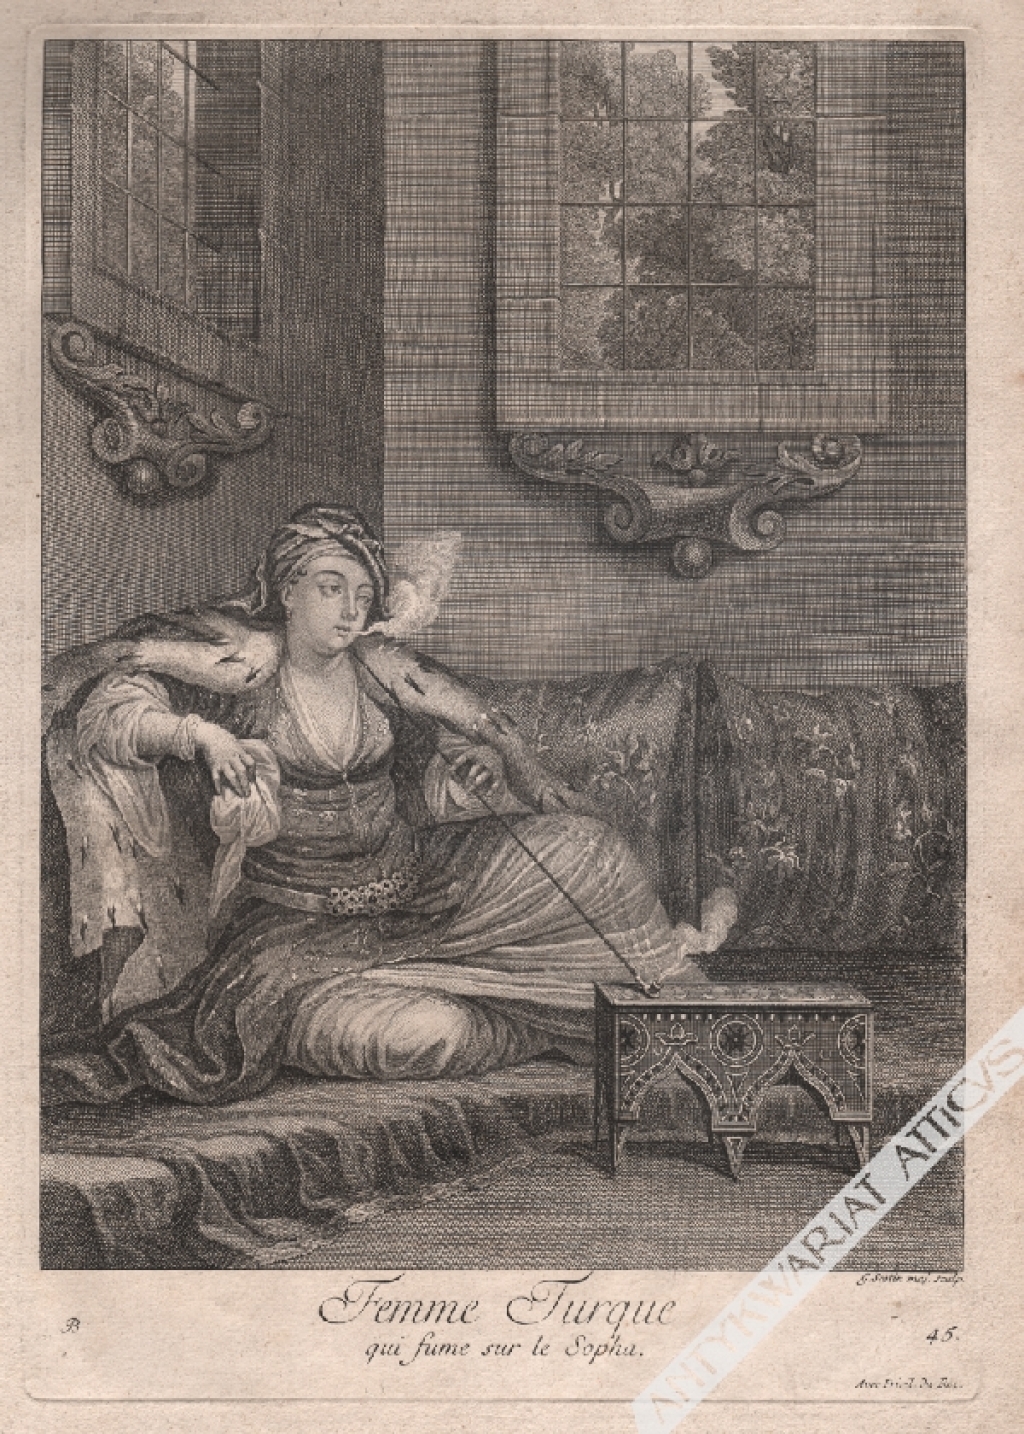 [rycina, 1714] Femme Turque qui fume sur le Sopha 1707-1708  [Turczynka paląca tytoń]